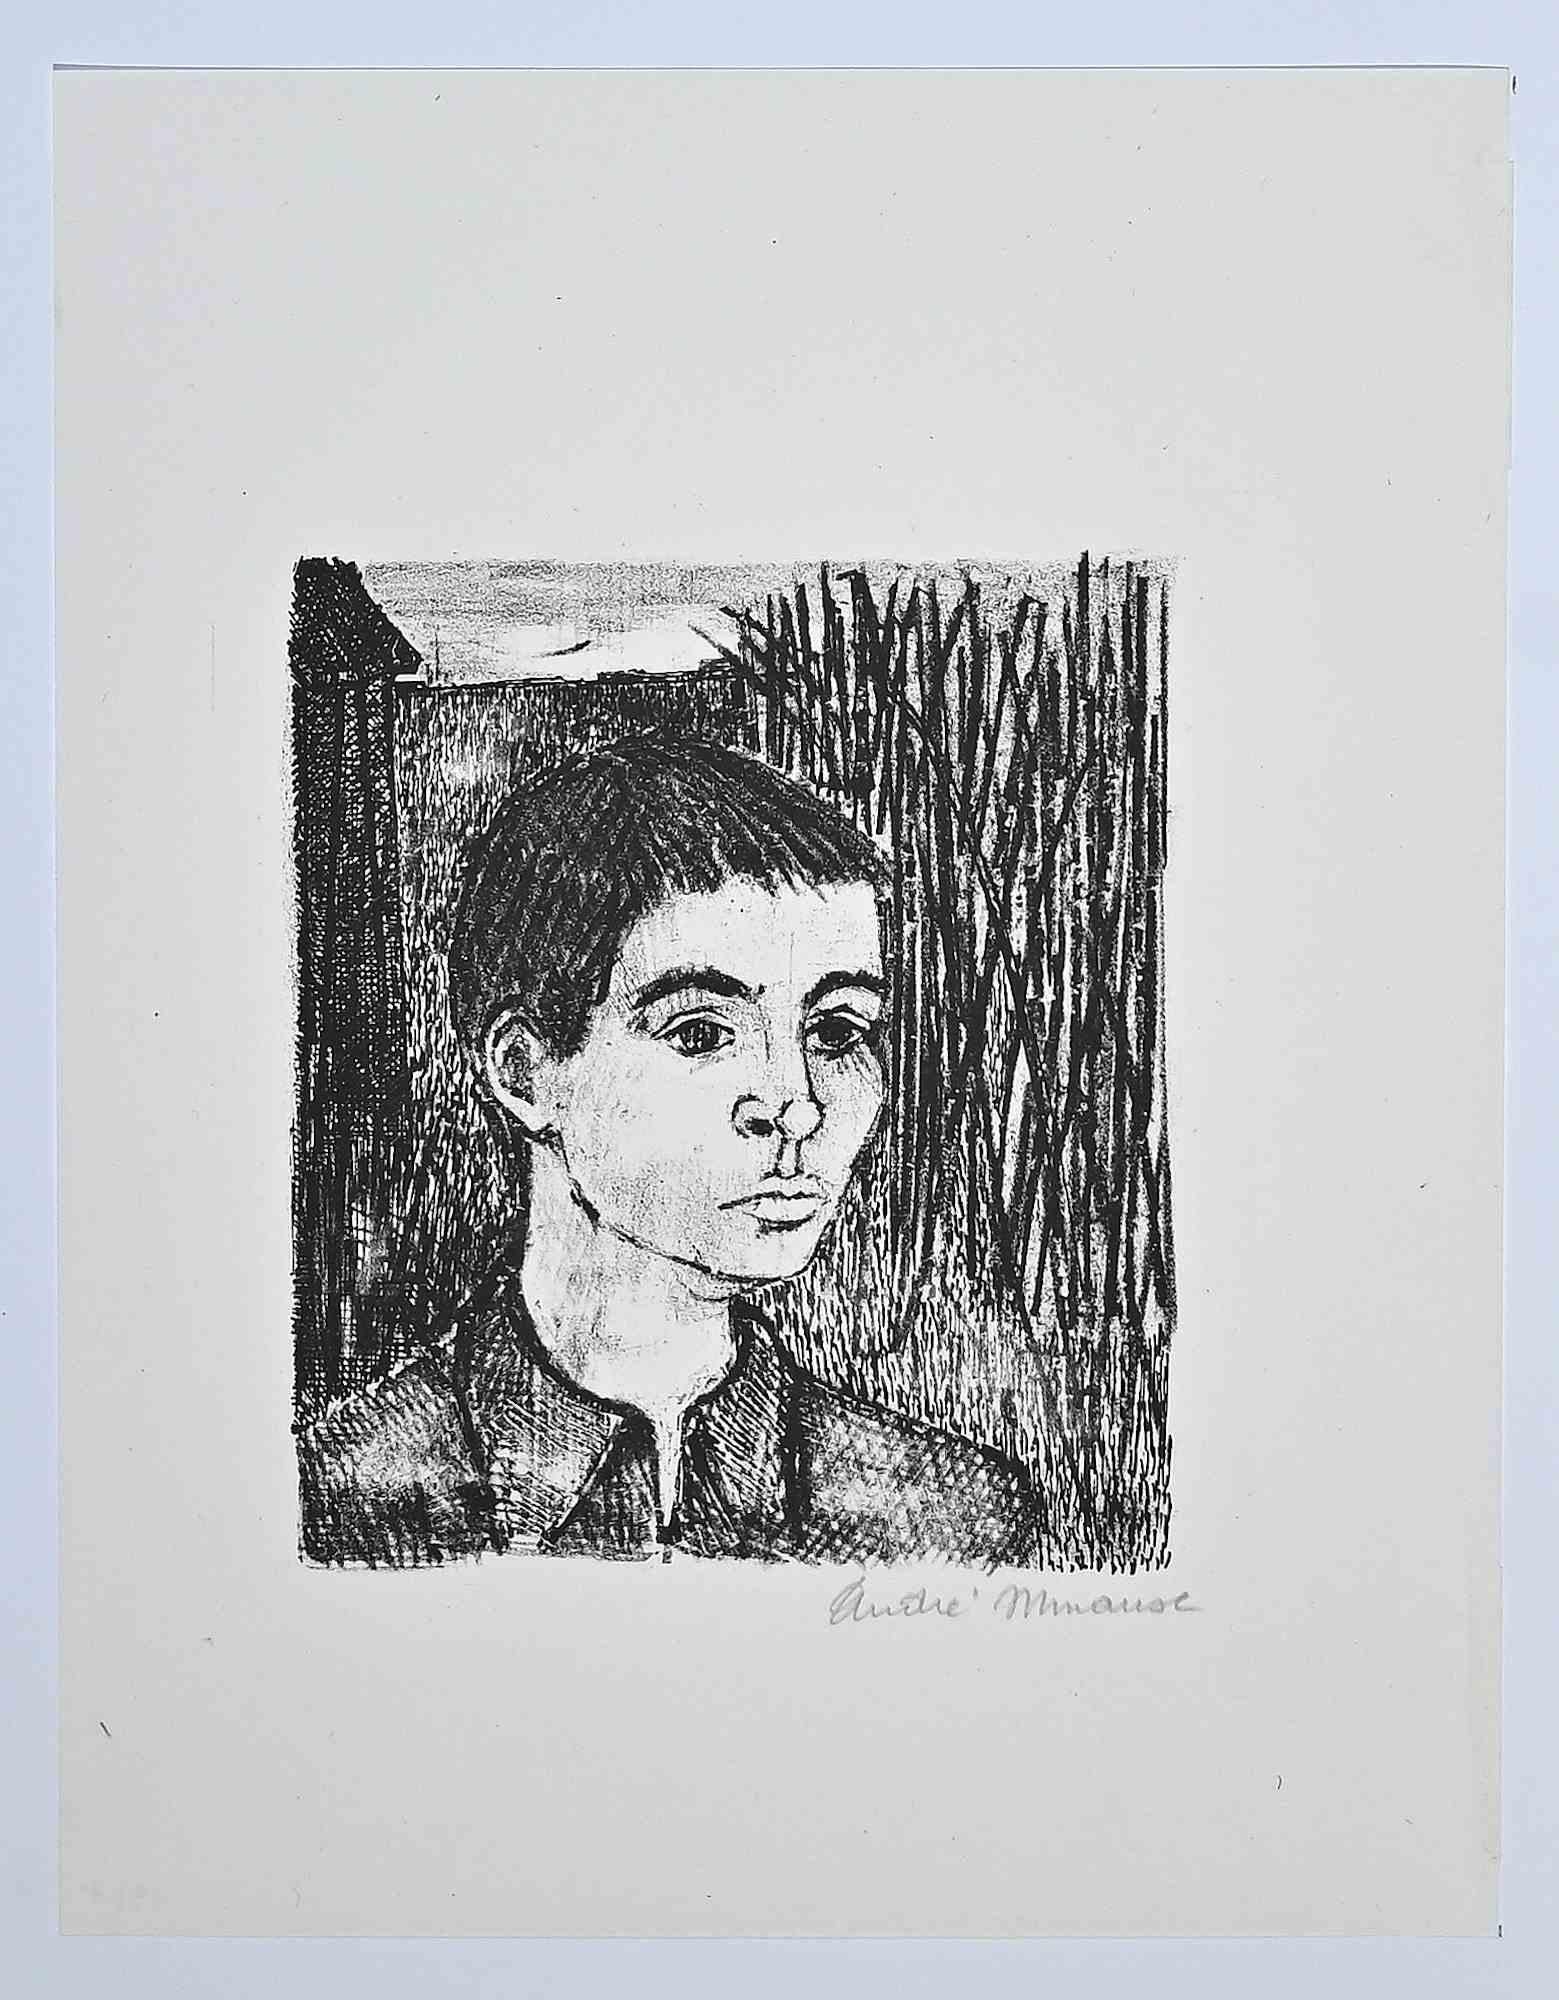 André Minaux Figurative Print - Portrait - Original Lithograph by Andre Minaux - mid-20th Century